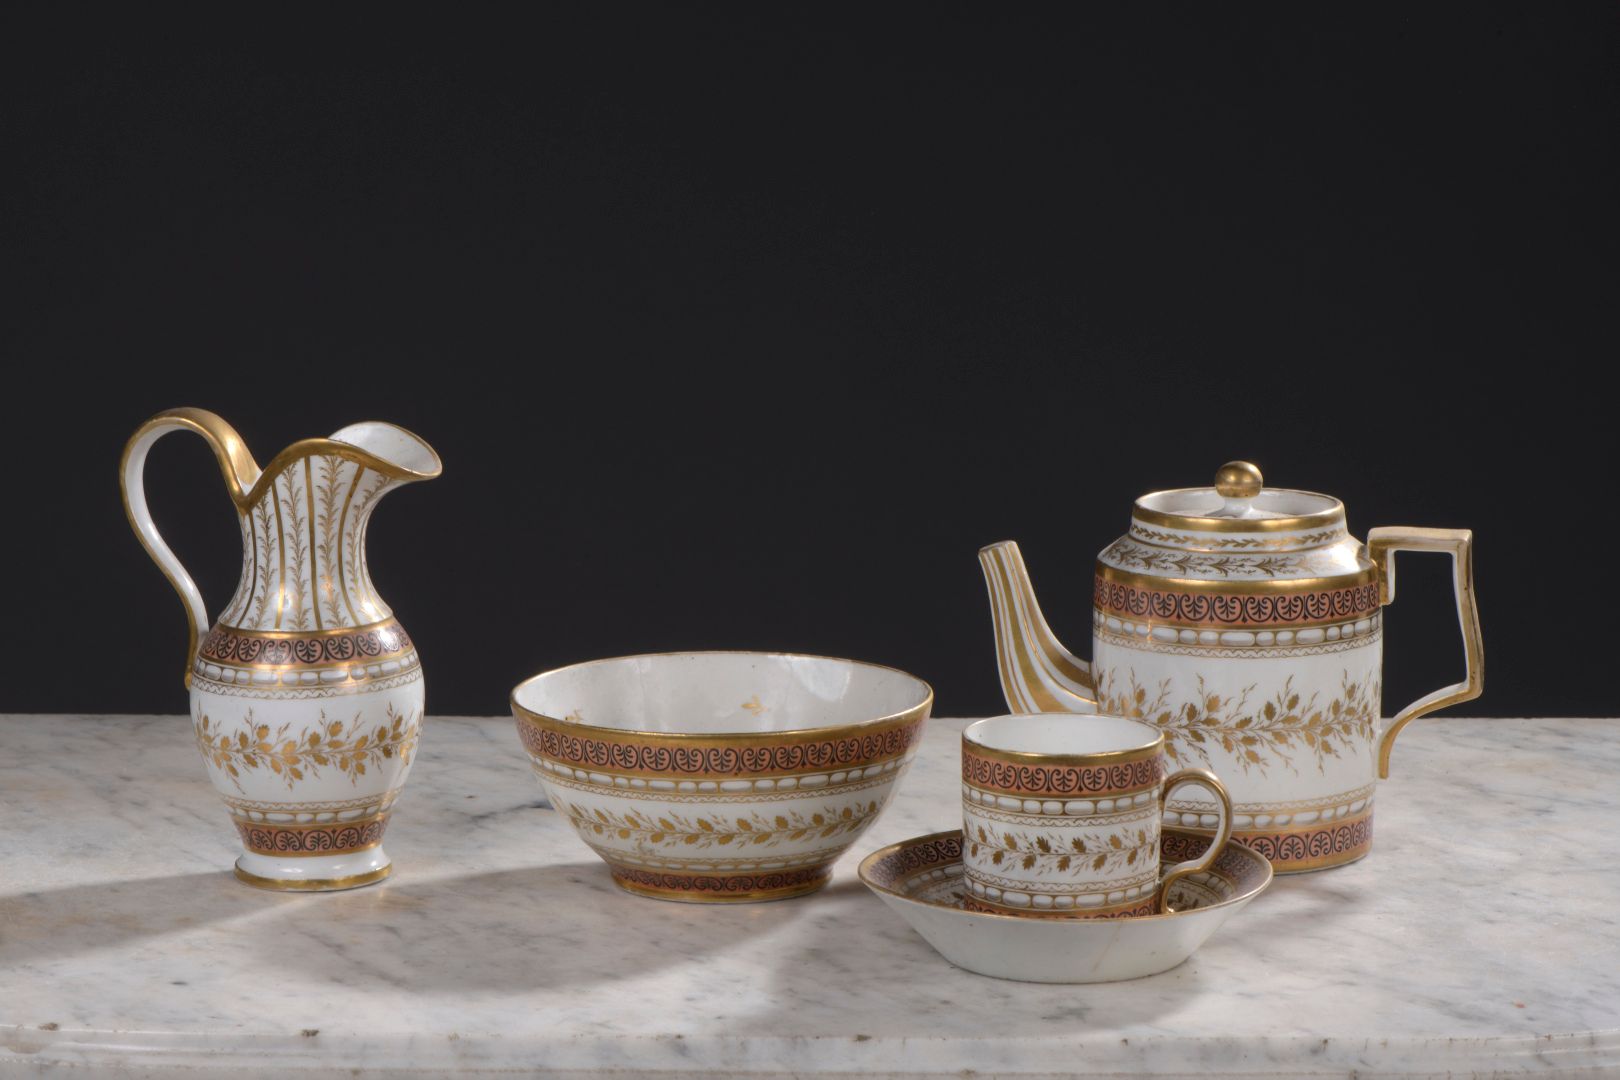 Null 巴黎，19世纪初

瓷器服务包括一个有盖茶壶，一个利特隆杯和它的茶托。

一个牛奶罐，一个碗，在橙色的背景上装饰着金色的叶子和黑色的棕榈树花环。碗上标&hellip;